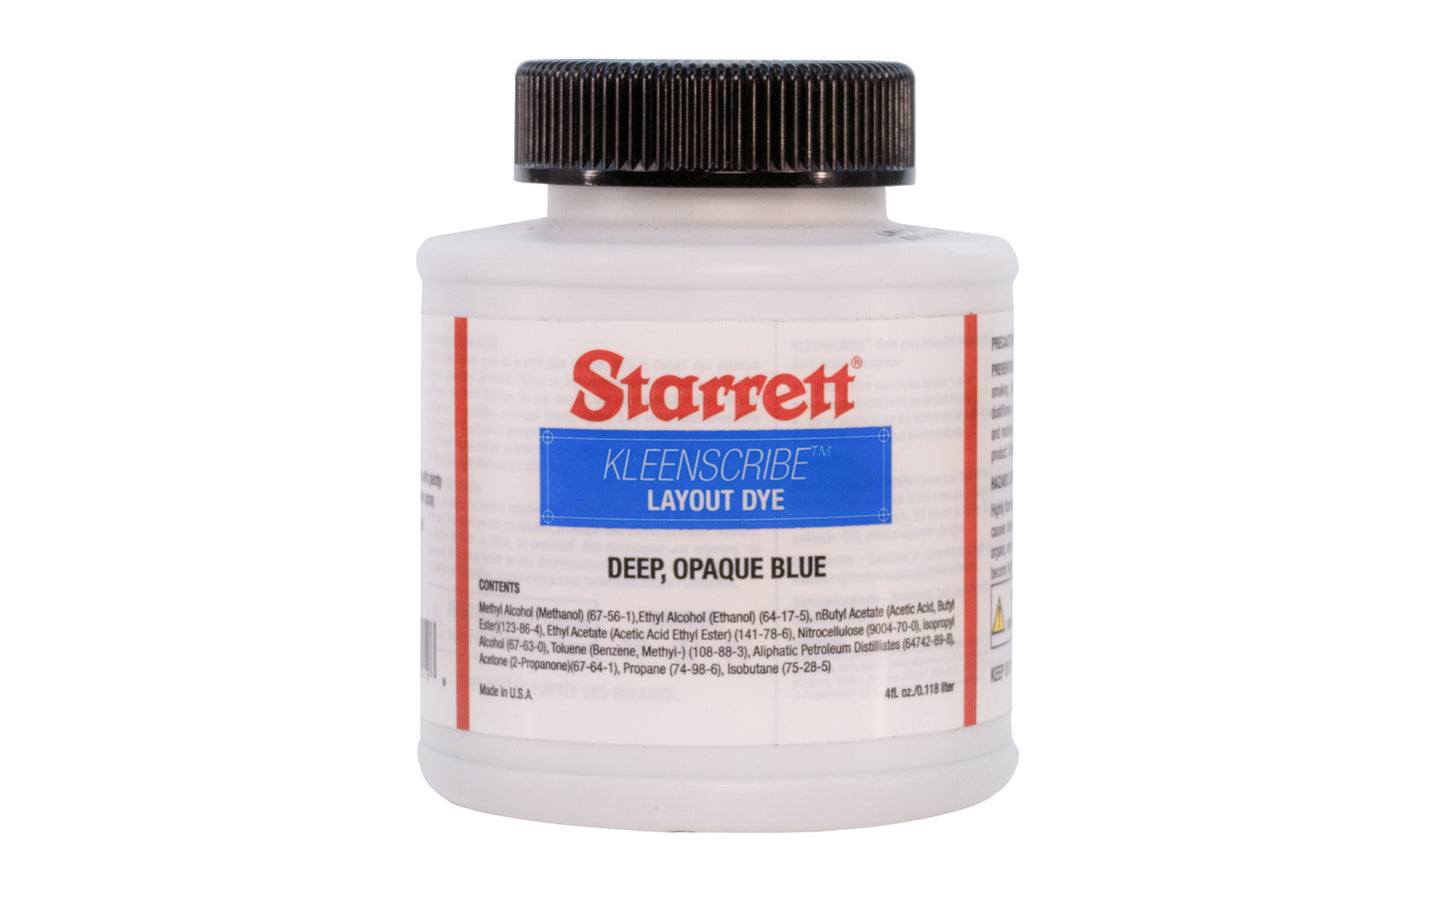 Starrett "Kleenscribe" Layout Dye - Deep, Opaque Blue - 4 oz. Model No. 1610-4. 049659532128.  Made in USA.